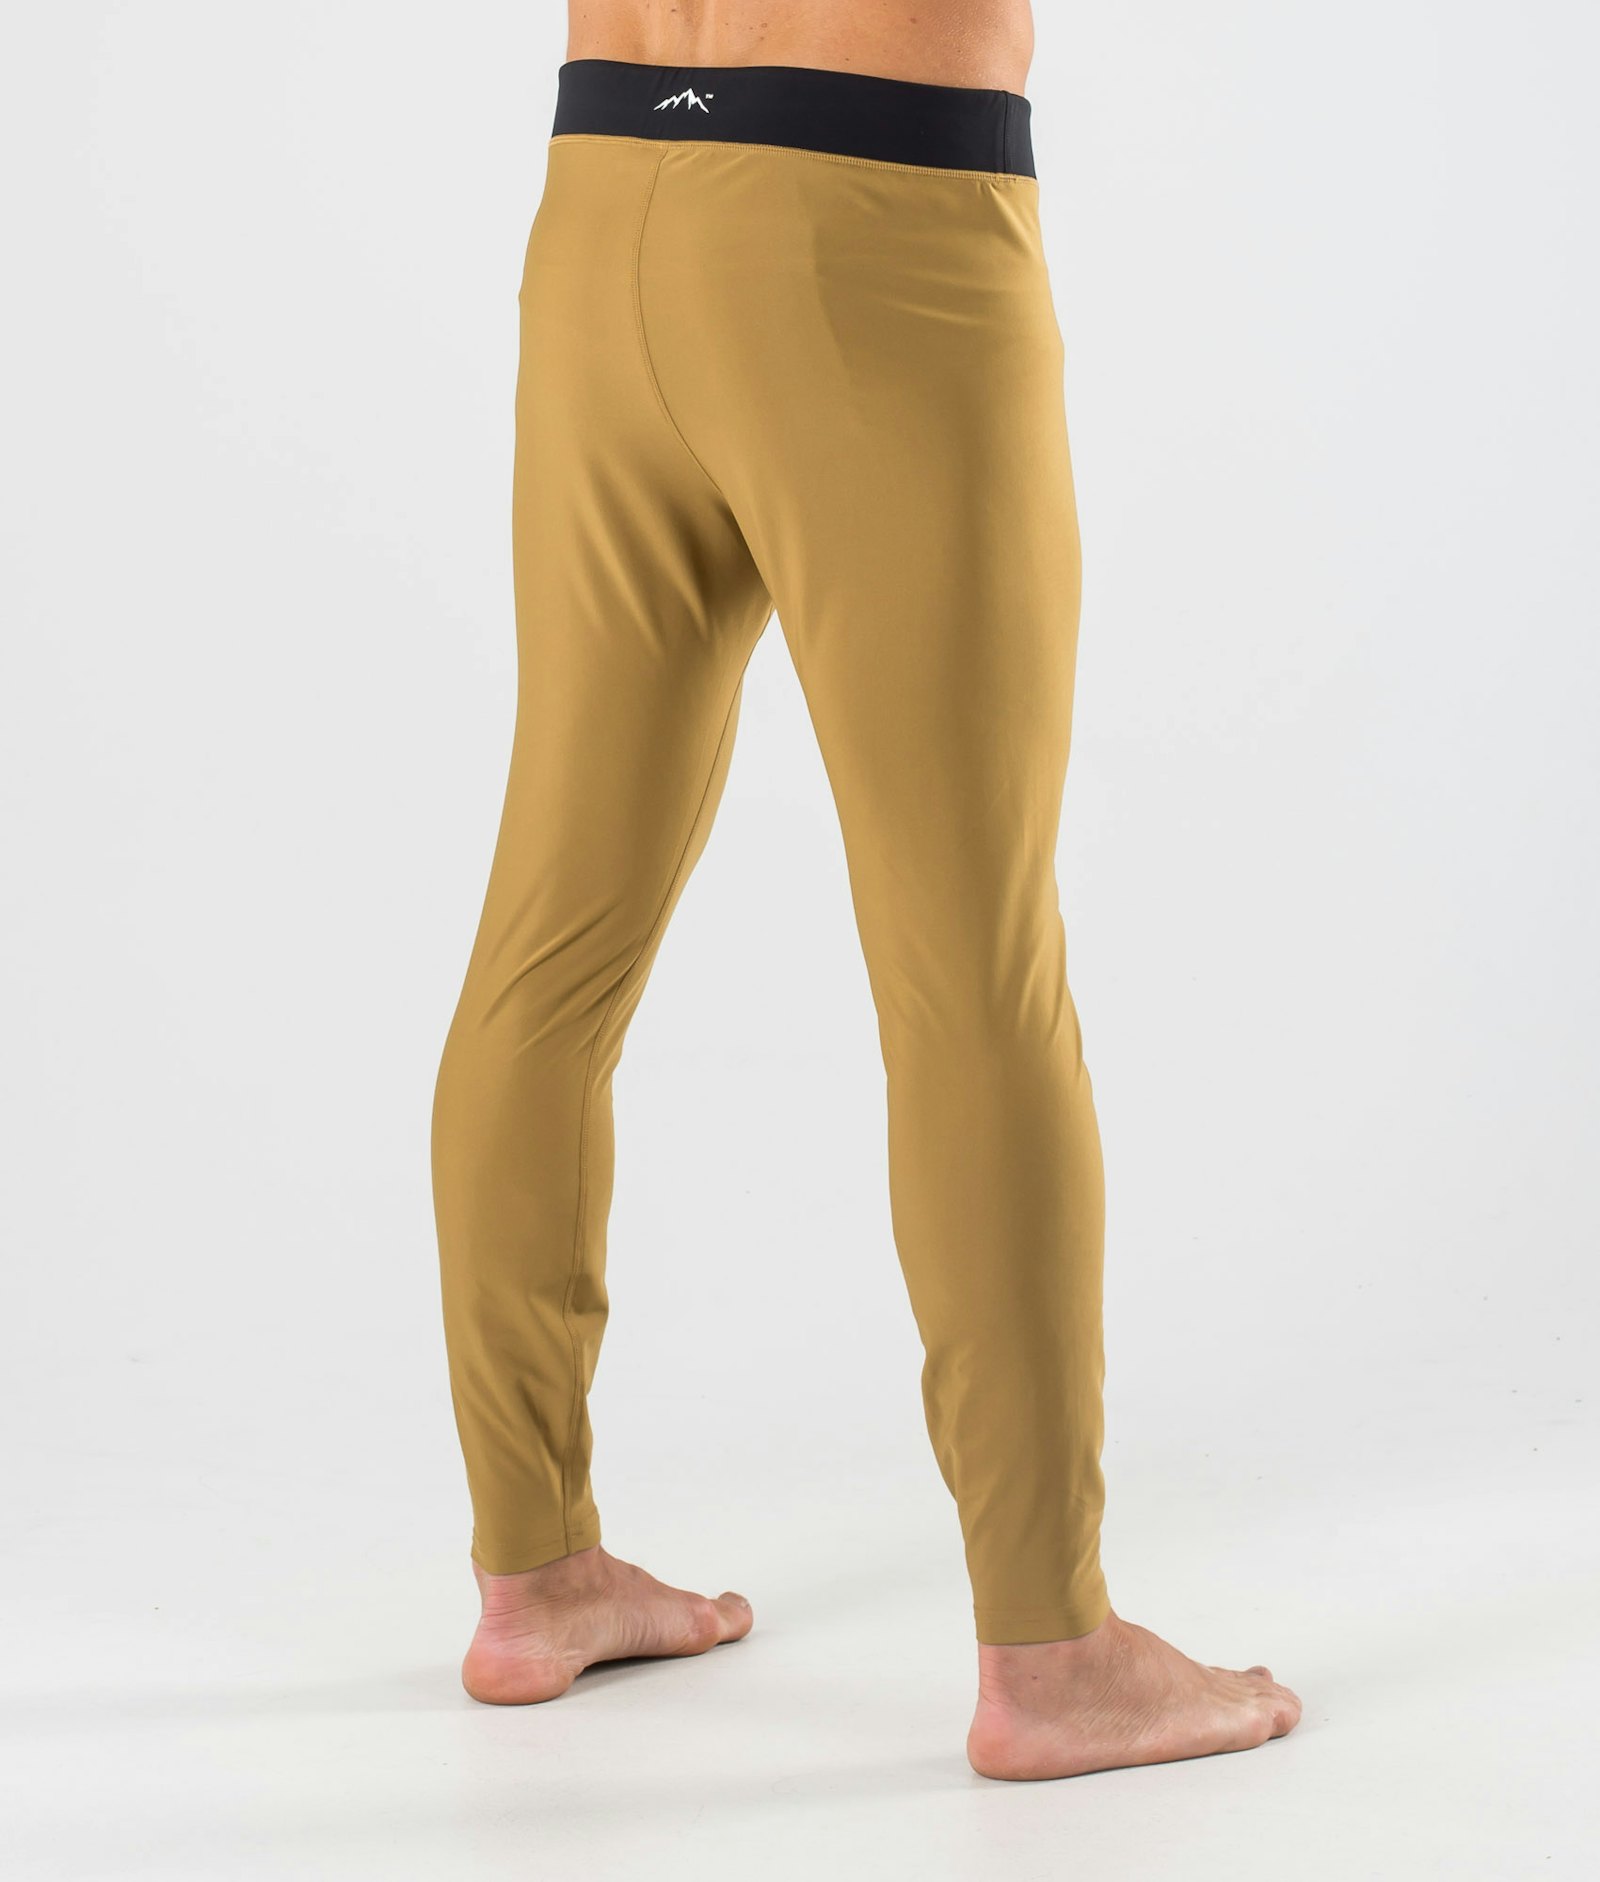 Snuggle Pantaloni Termici Uomo 2X-Up Gold